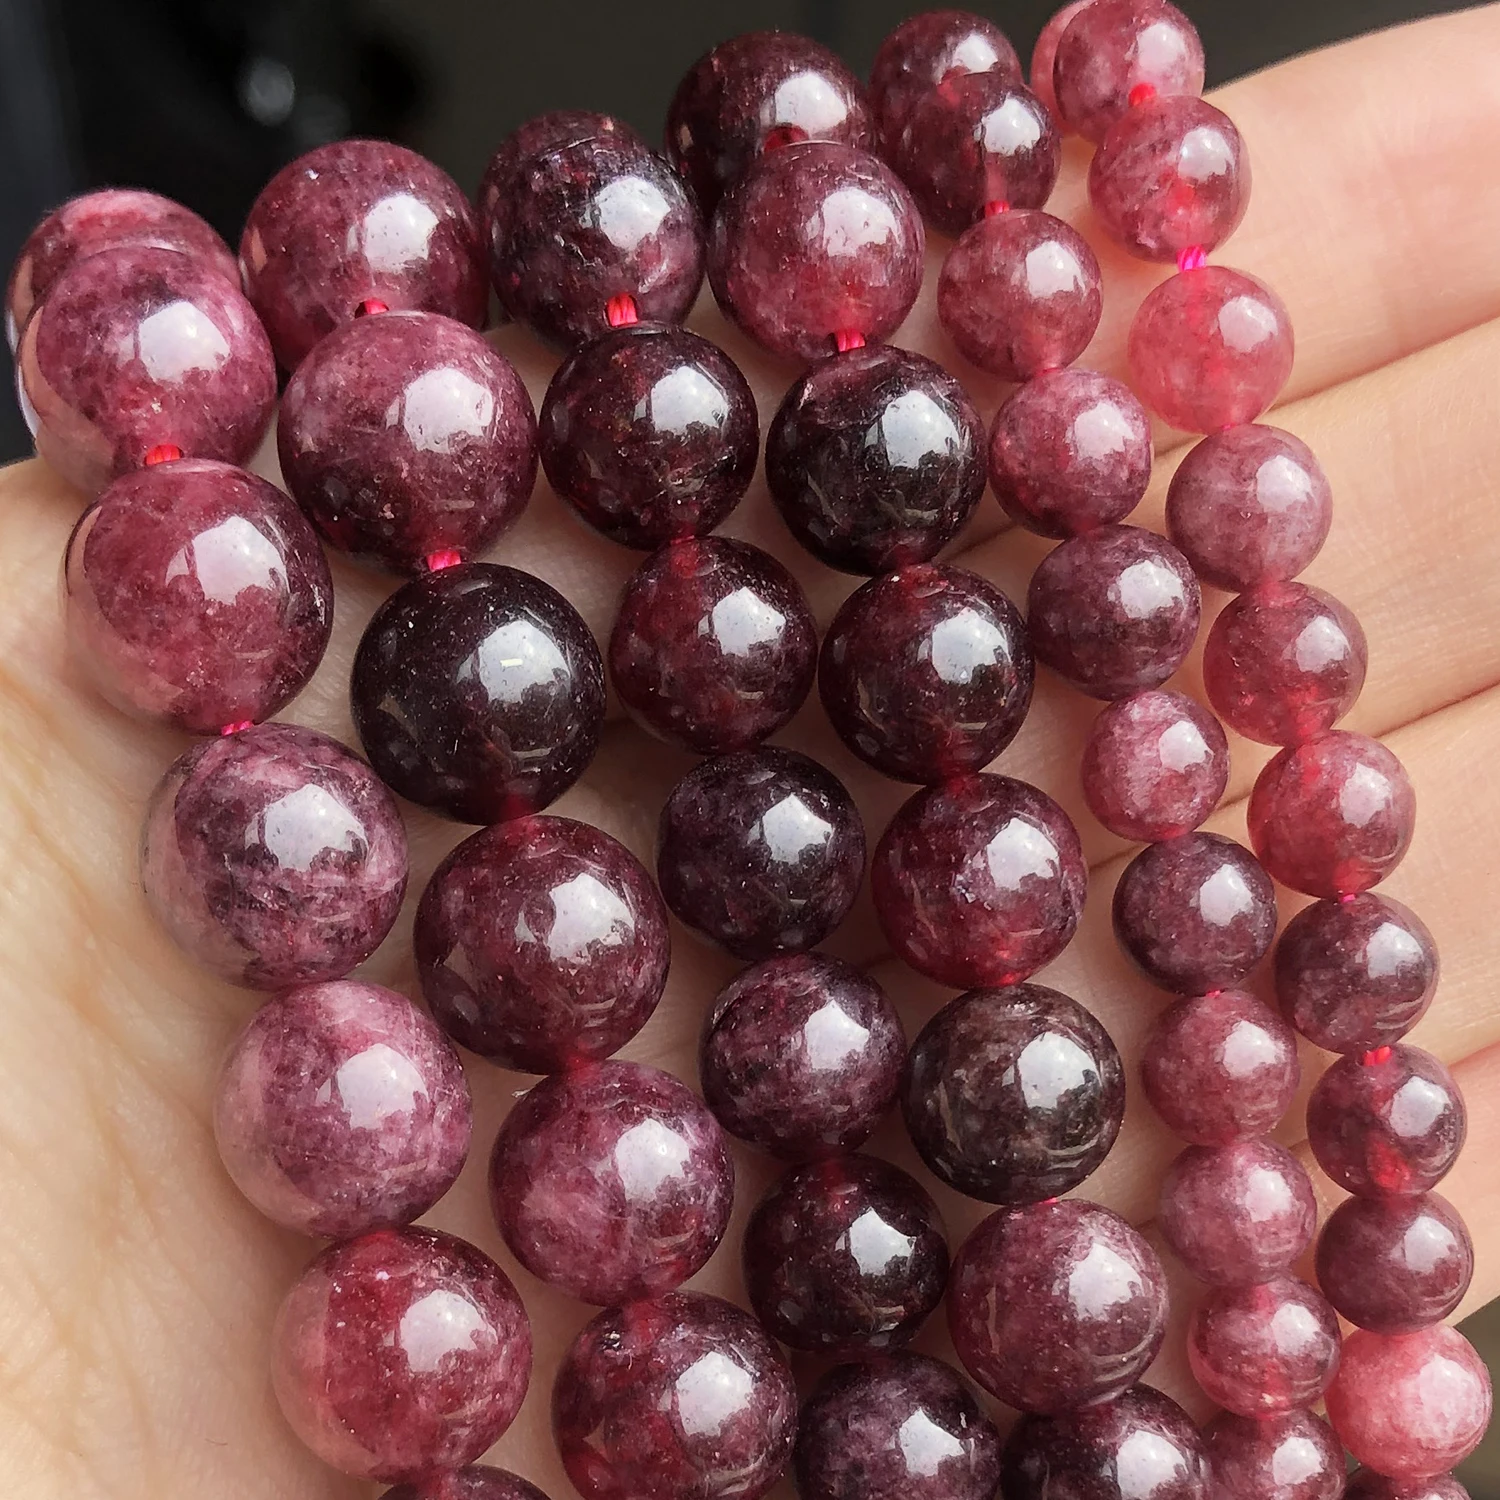 Купи Natural Stone Dark Red Garnet Quartz Round Loose Beads for Jewelry Making Diy Bracelet Accessories 15''Inches Pick Size 6 8 10mm за 144 рублей в магазине AliExpress